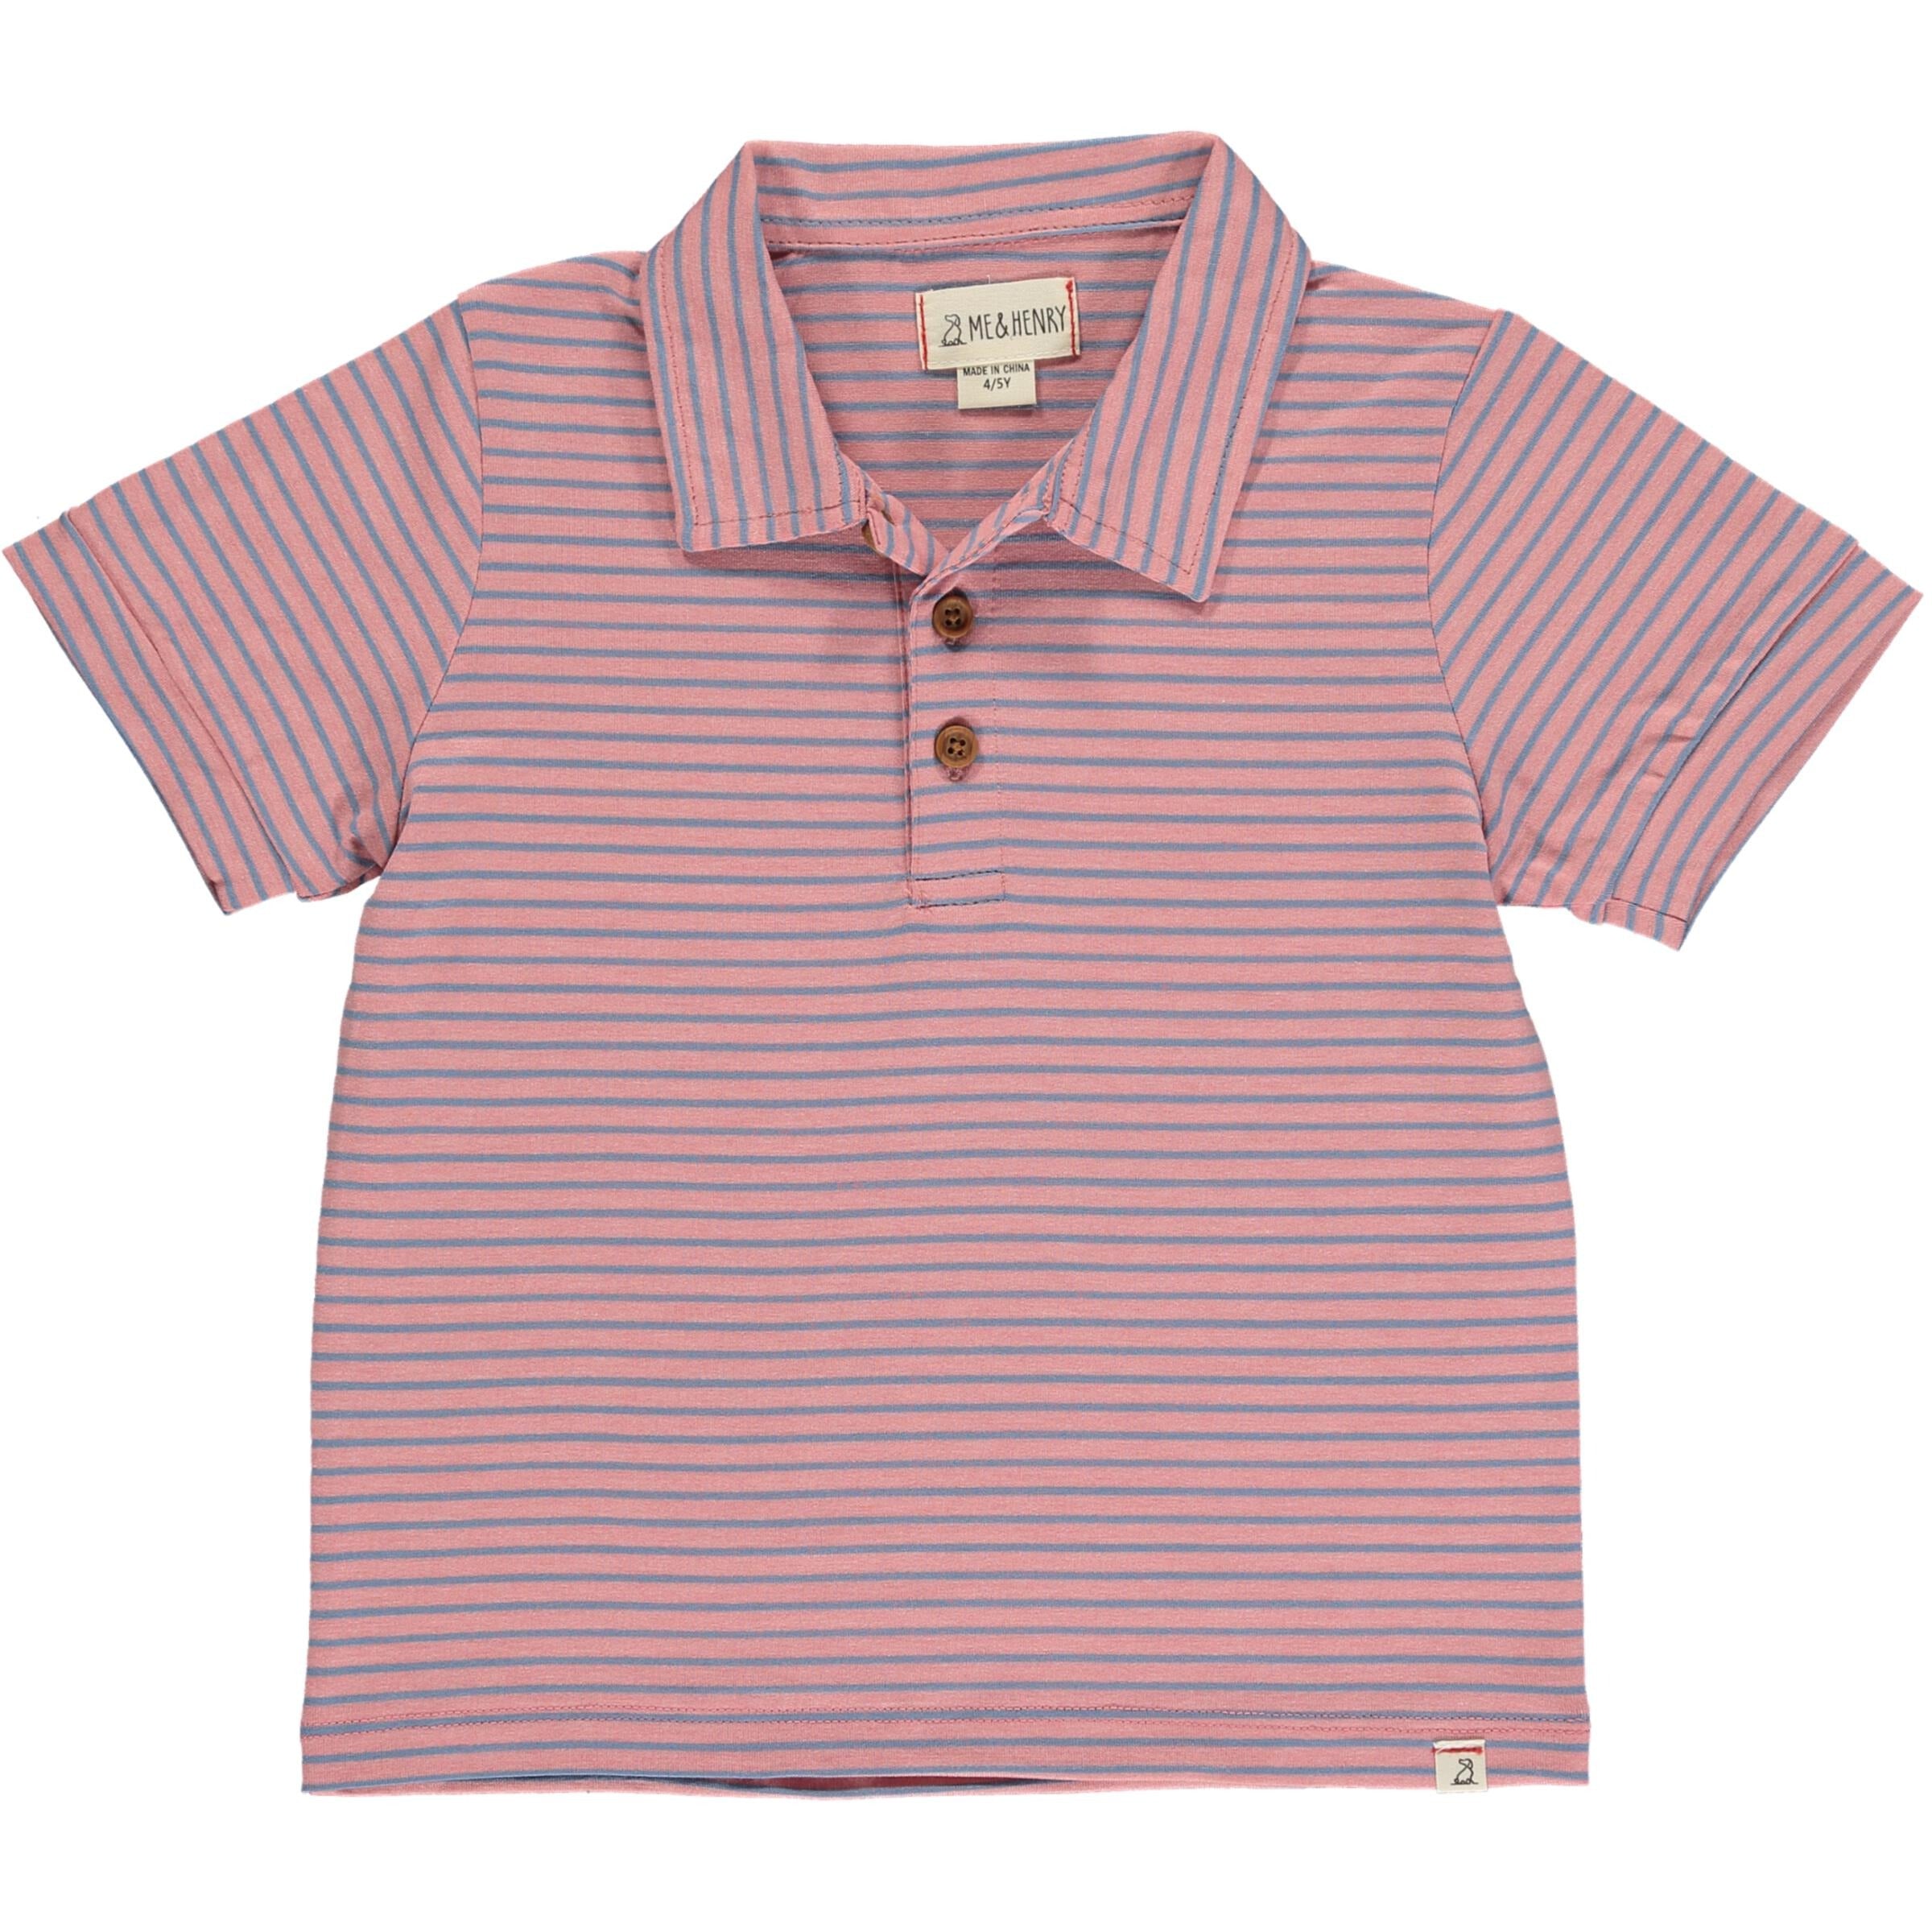 Flagstaff Polo - Pink/Blue Stripe